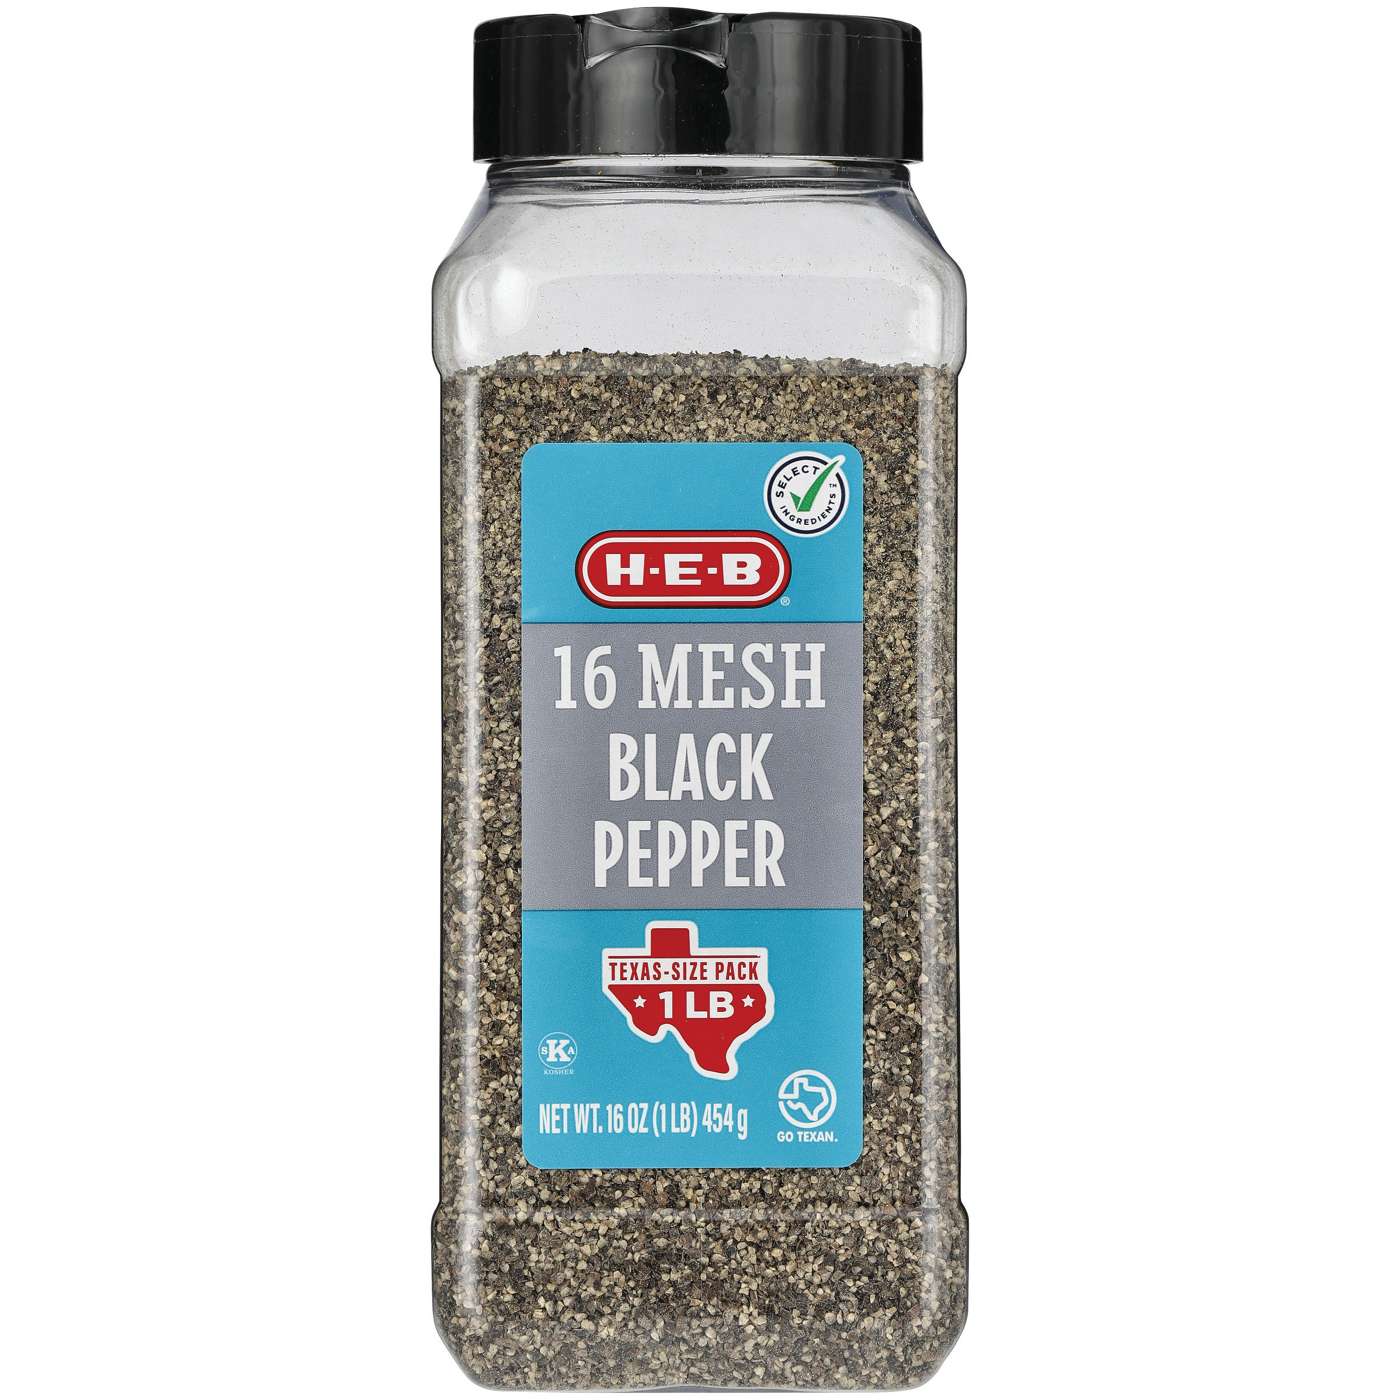 H-E-B 16 Mesh Black Pepper - Texas-Size Pack; image 1 of 2